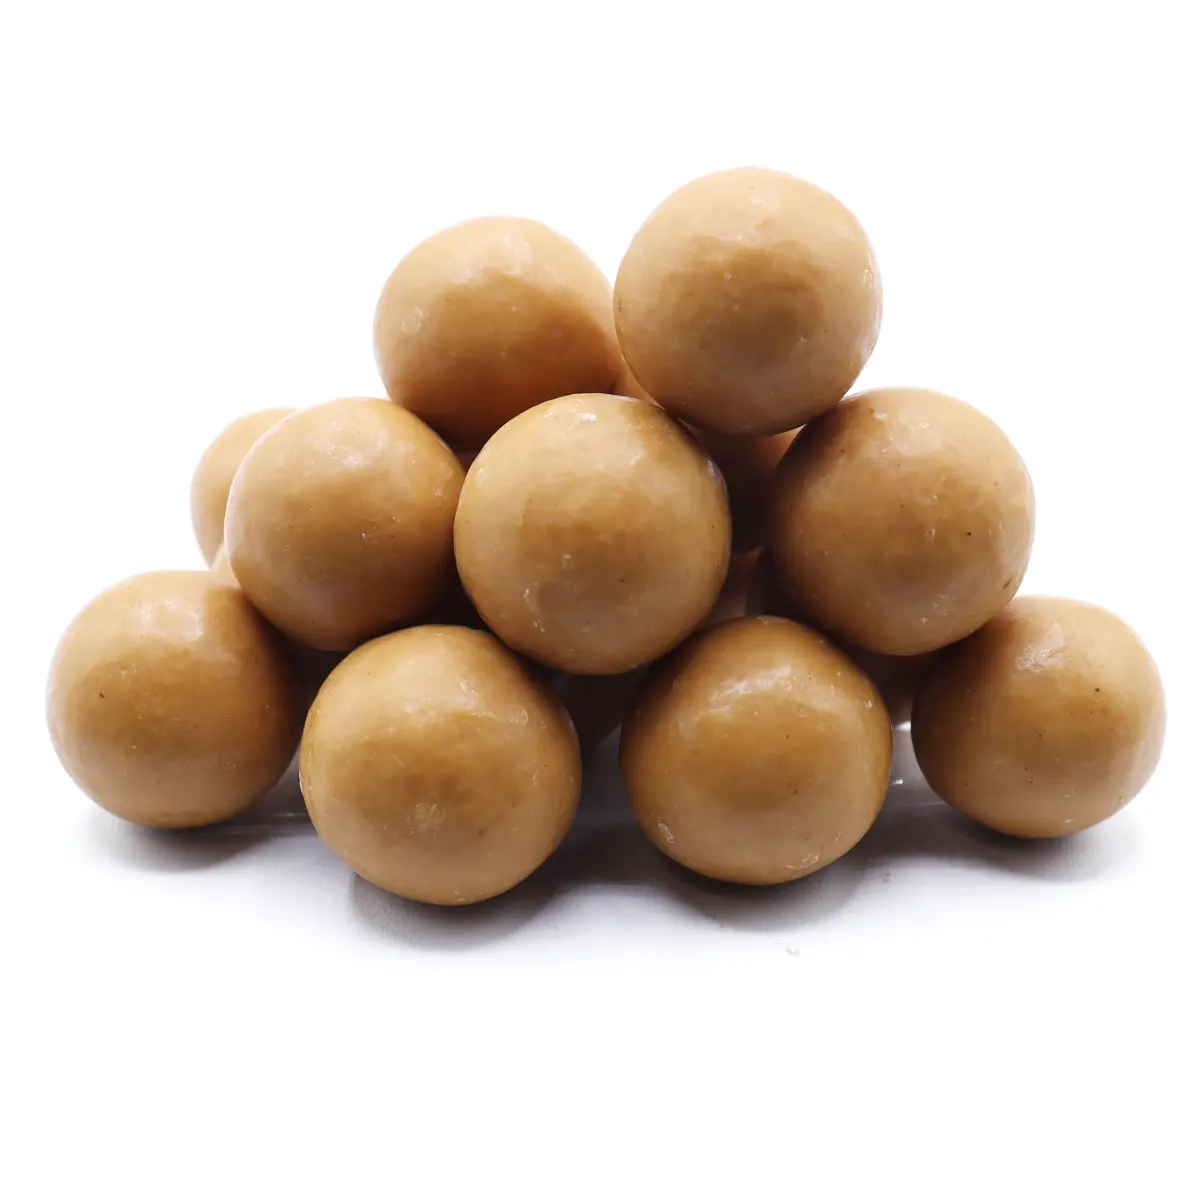 https://www.lorentanuts.com/wp-content/uploads/2023/03/Peanut-Butter-malted-milk-balls-Perspective-www.lorentanuts.com_.webp